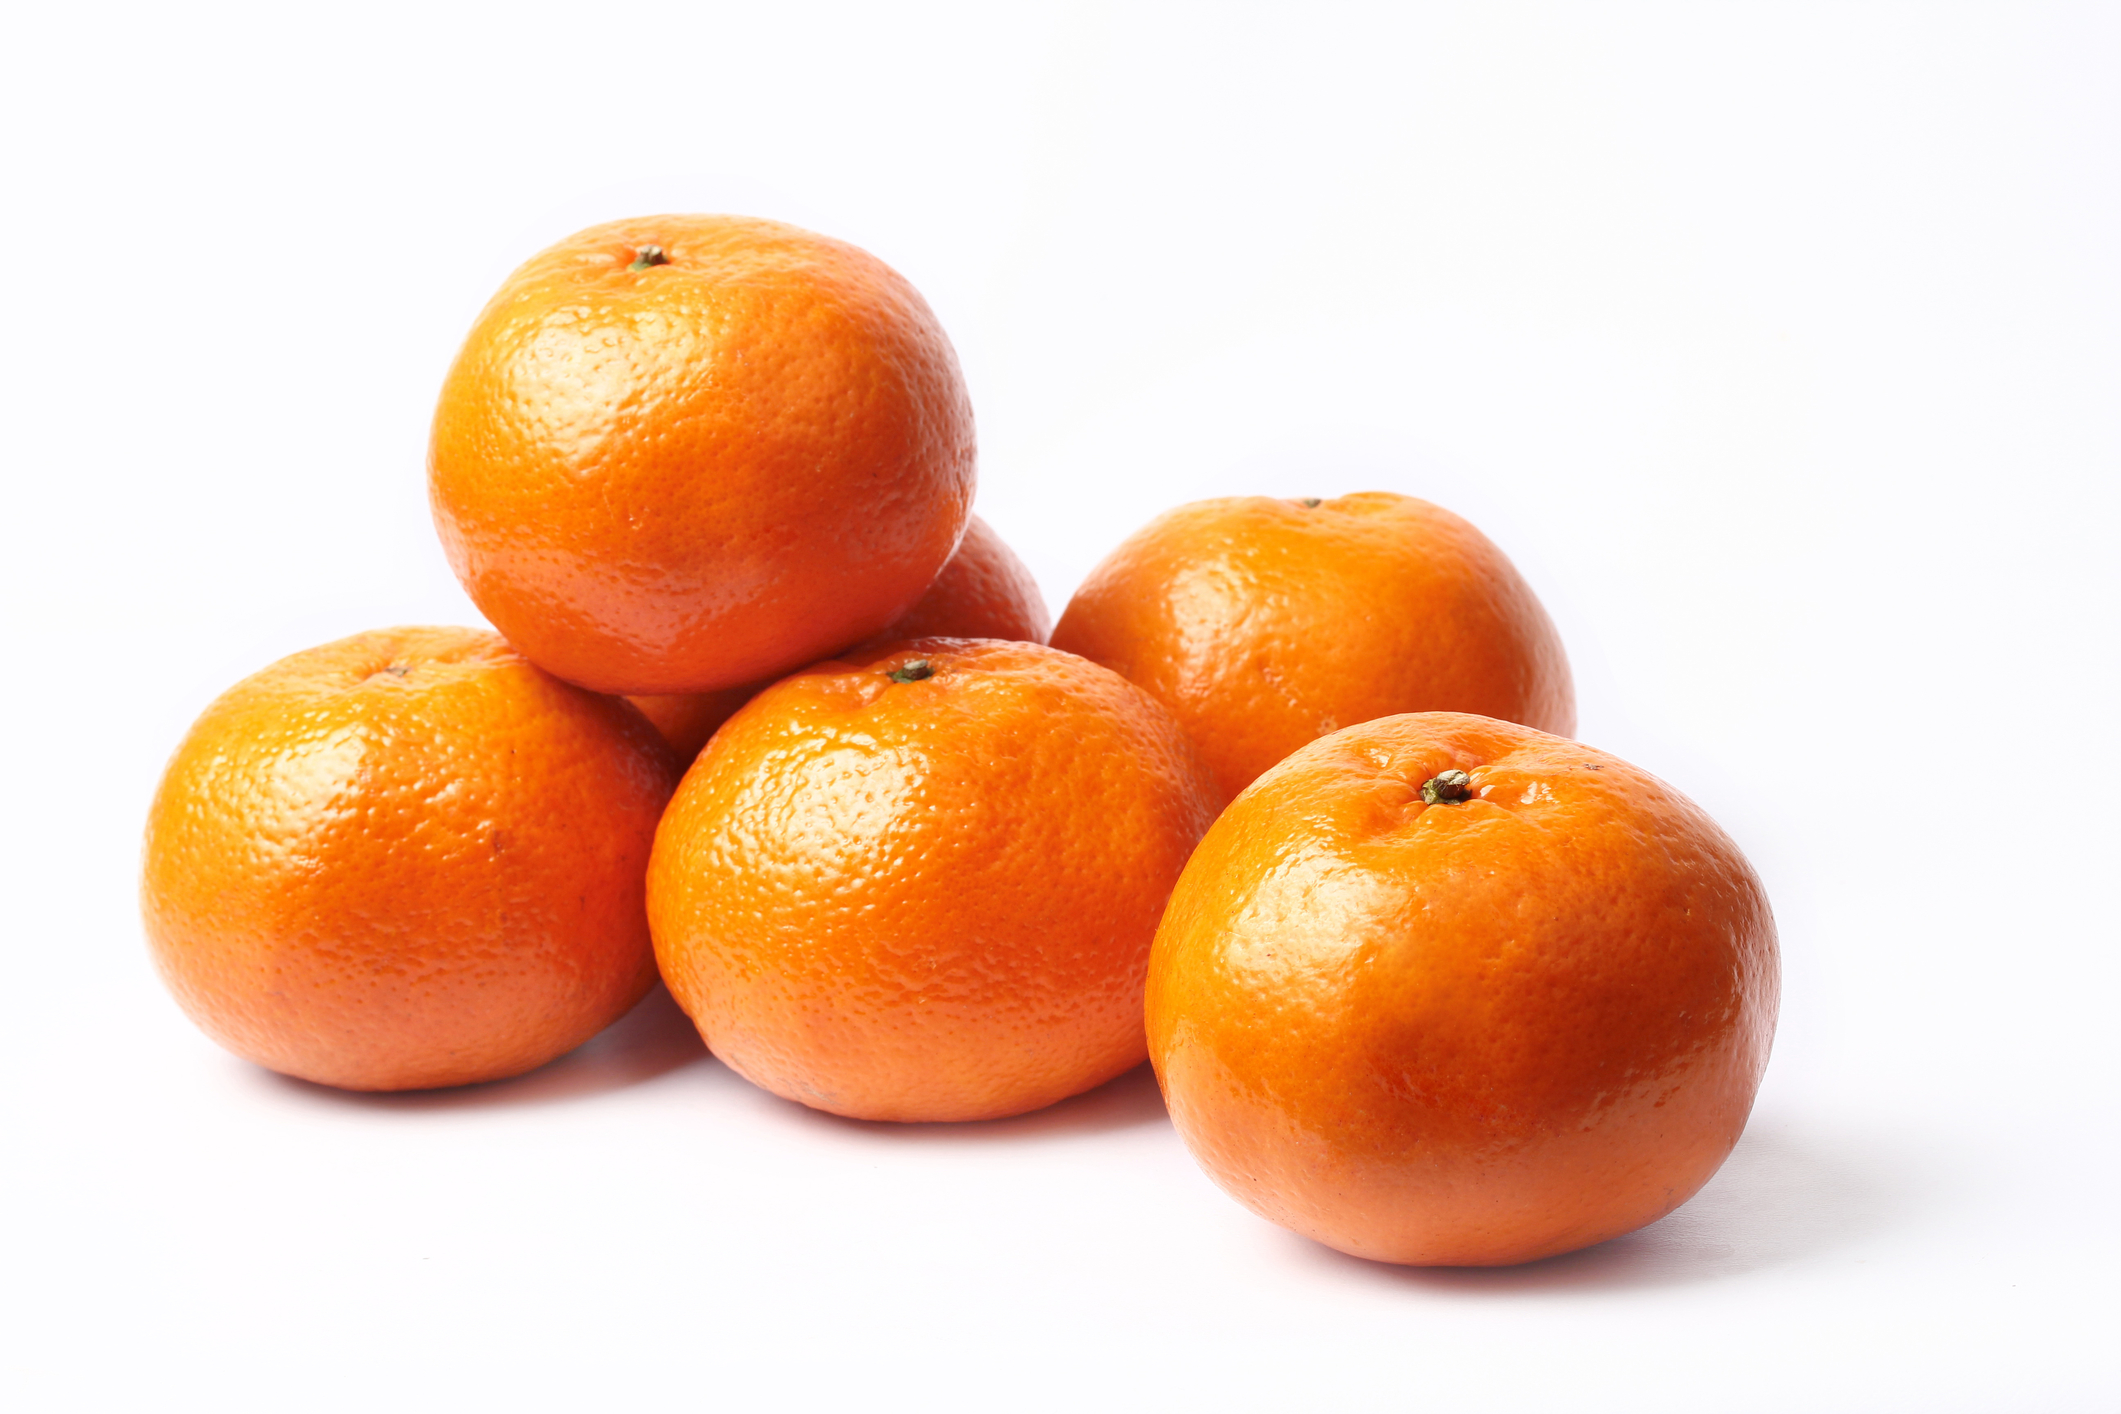 Mandarin Orri ca900-1000g/package - South Africa price per package